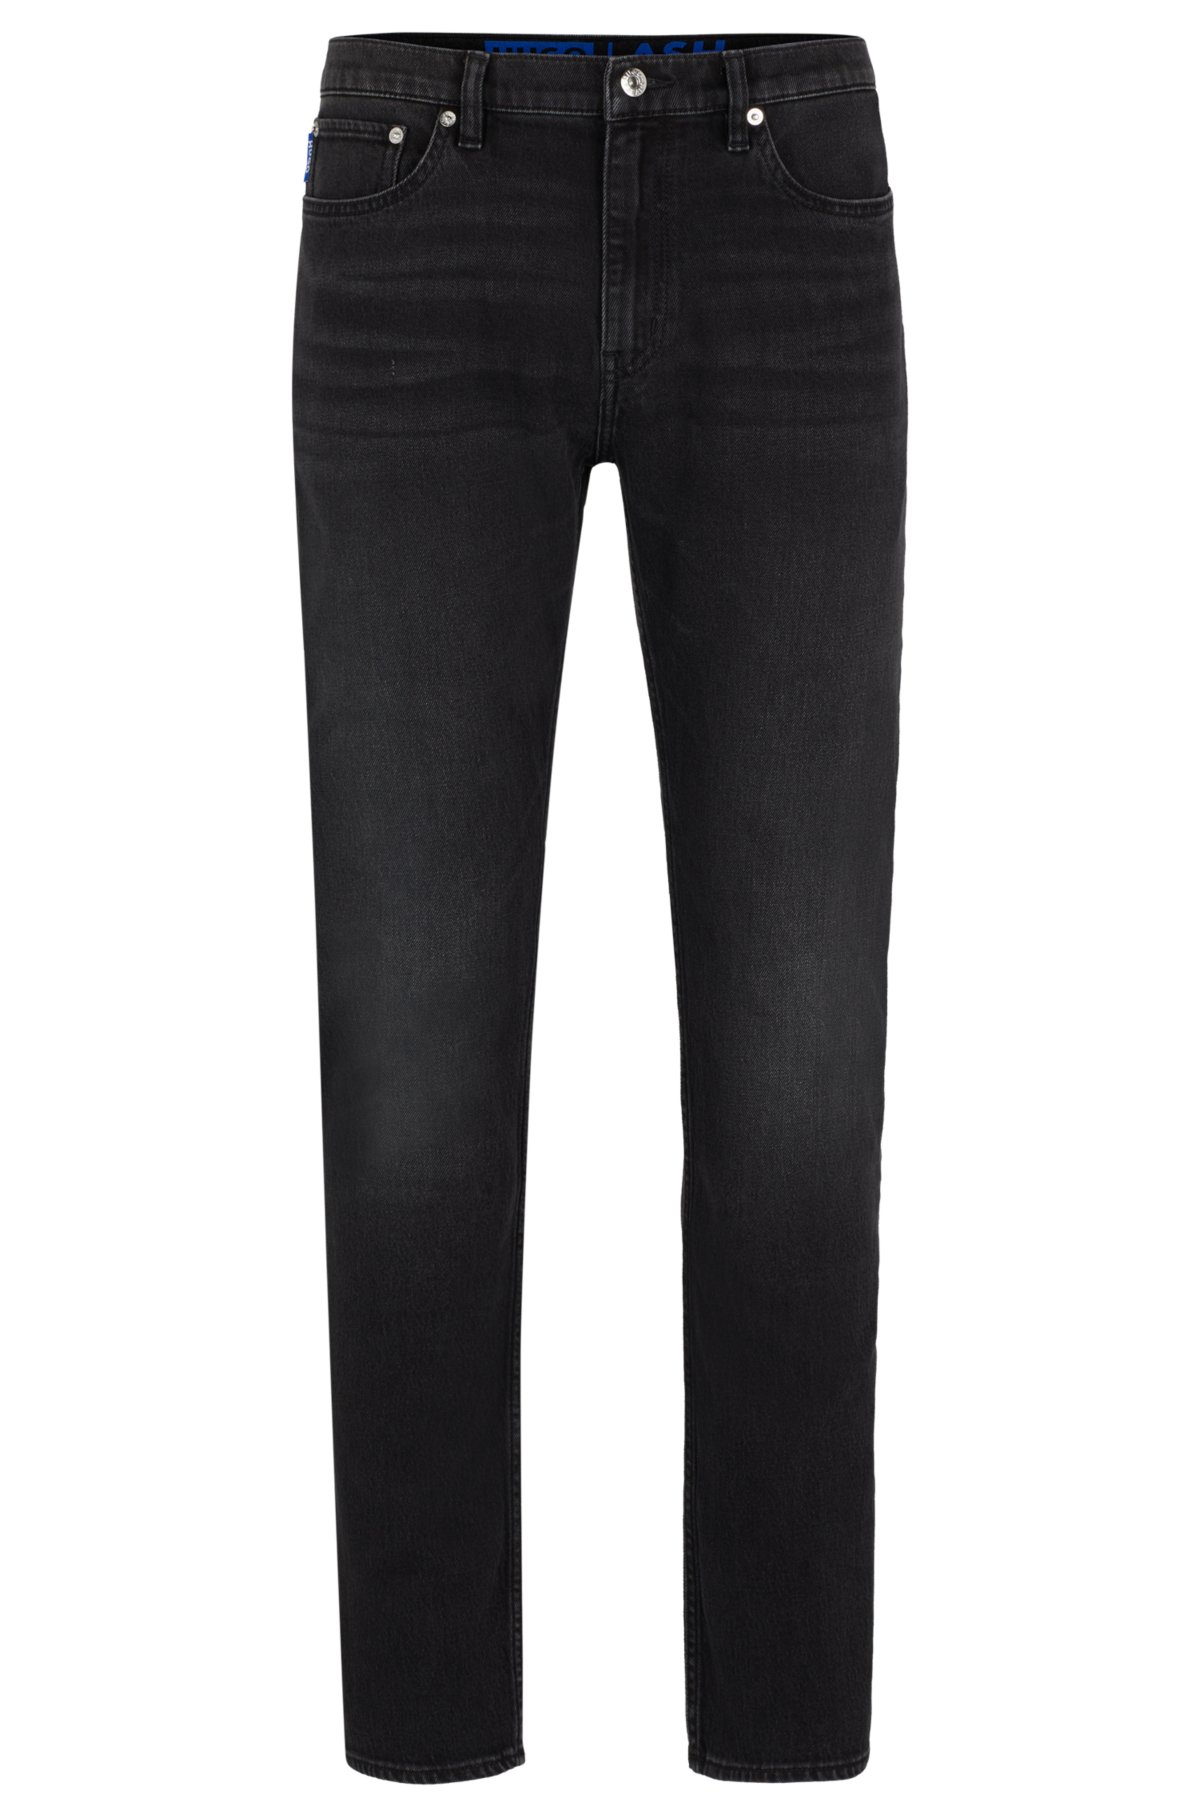 Slim-fit jeans in black stretch denim, Black